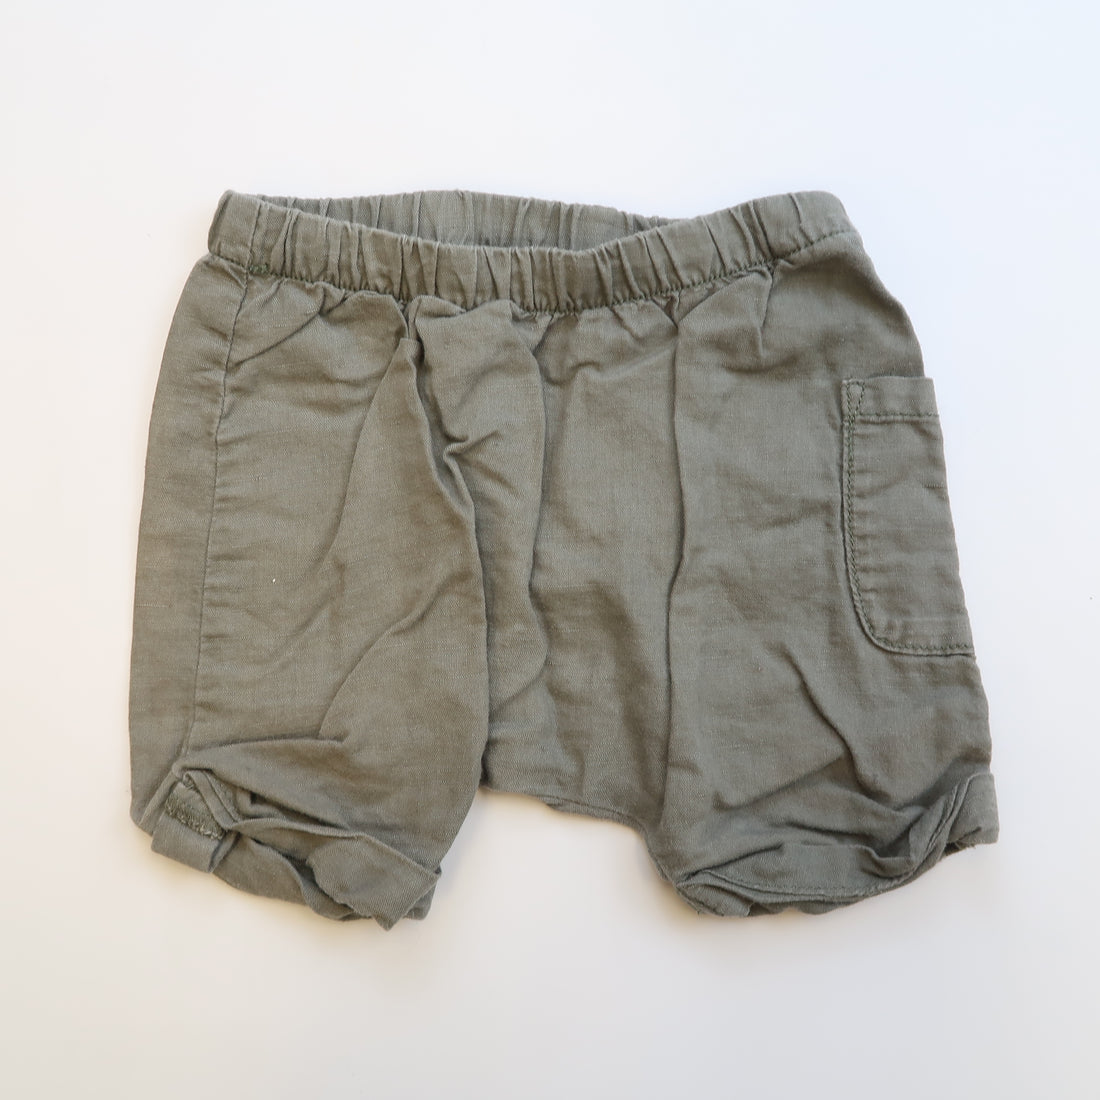 Old Navy - Shorts (6-12M)